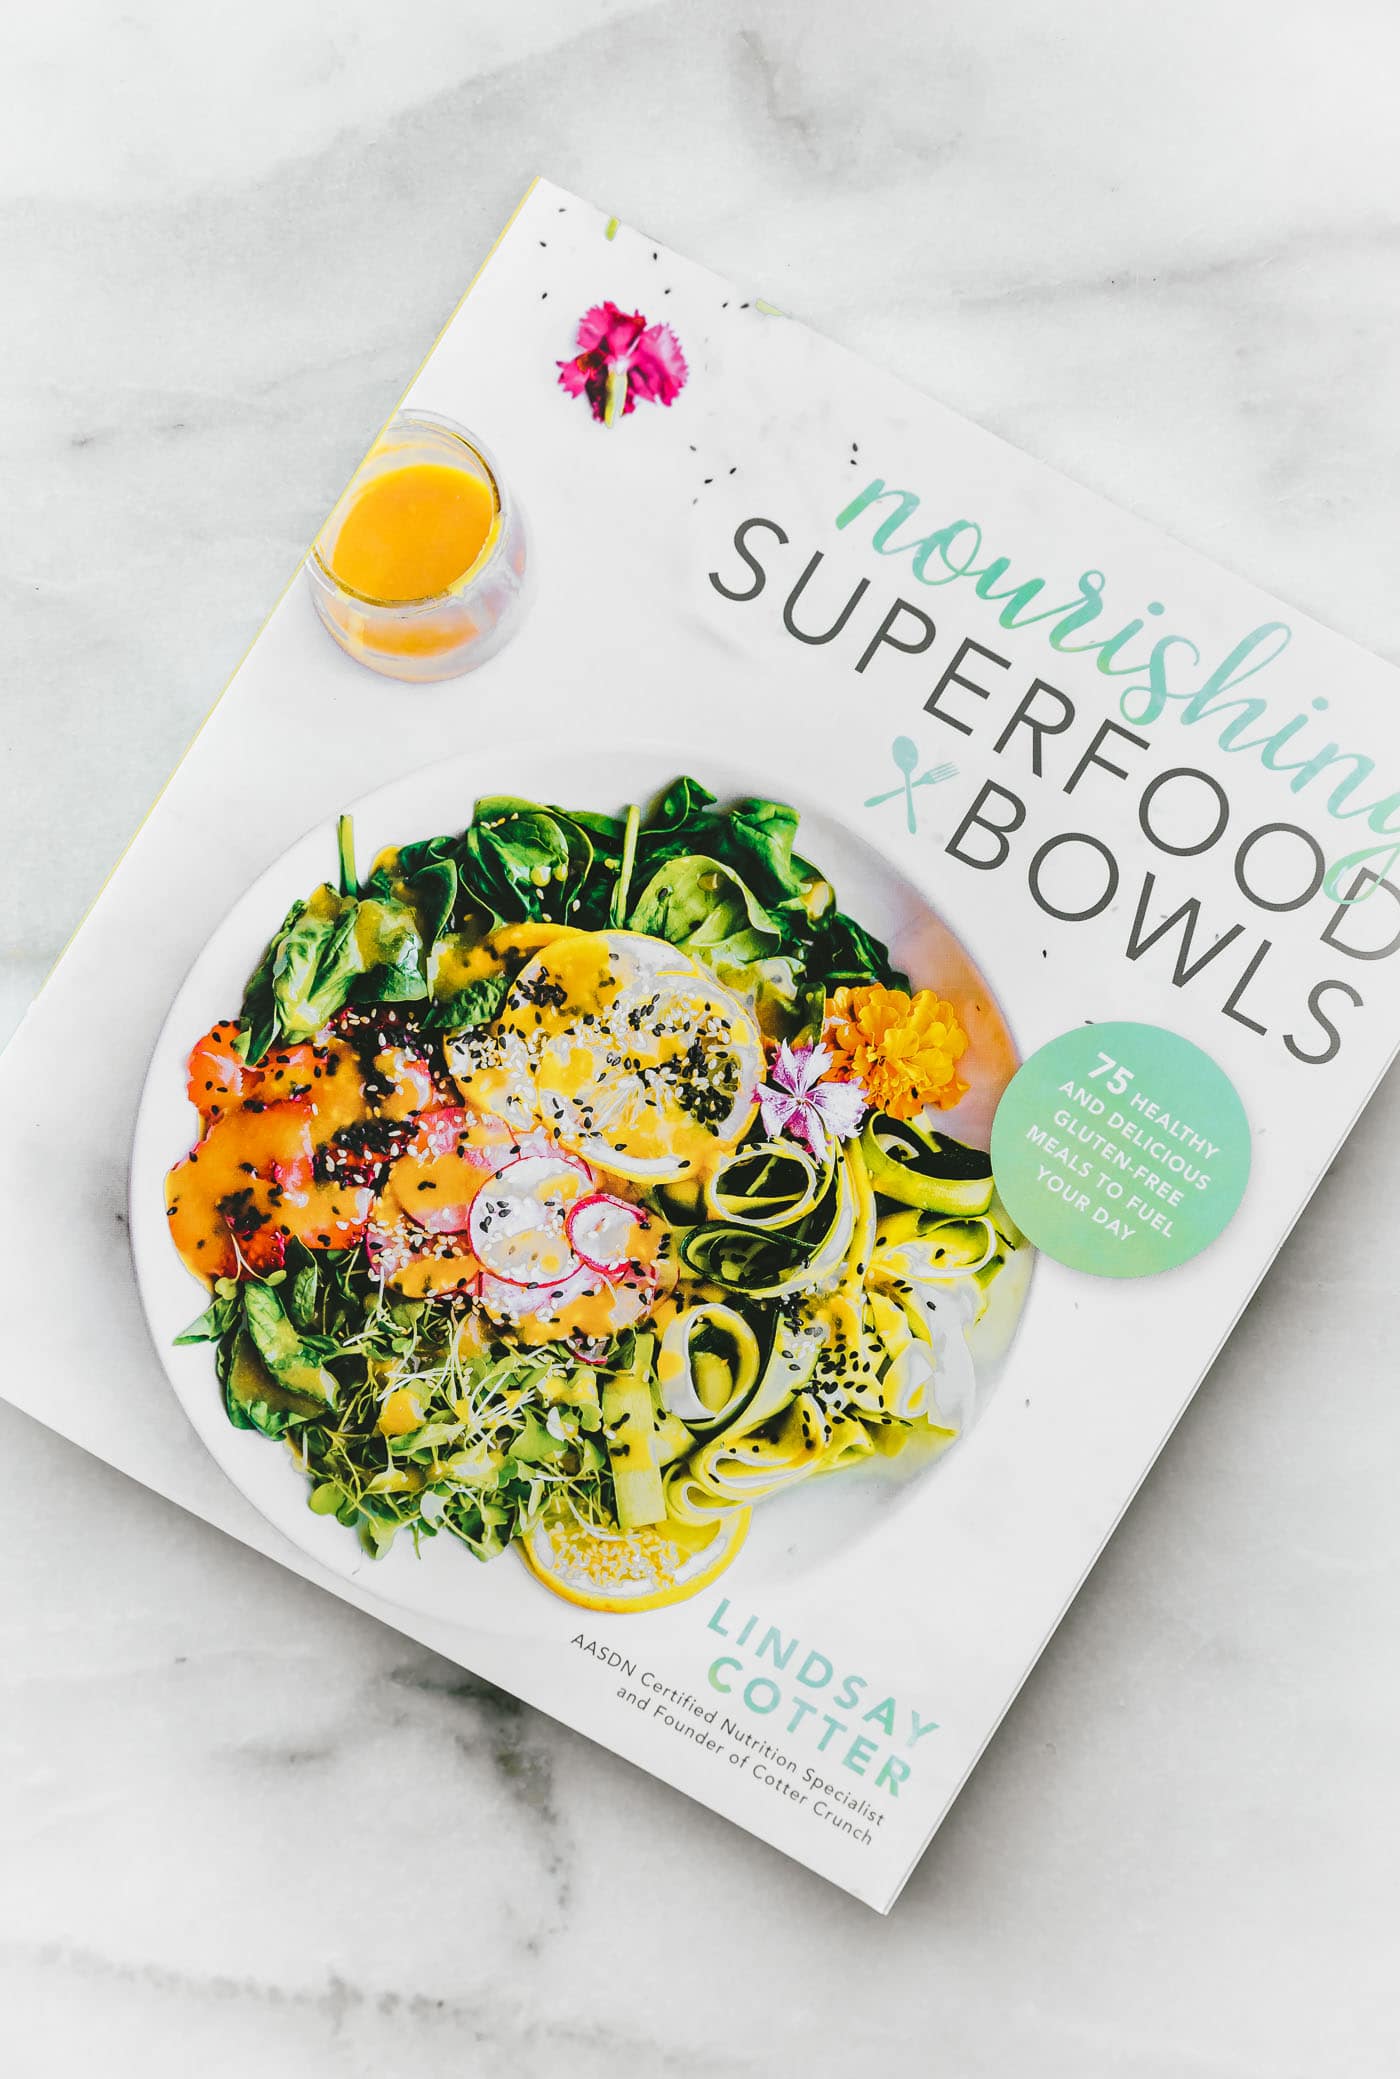 nourishing superfood bowls cookbook on marble background